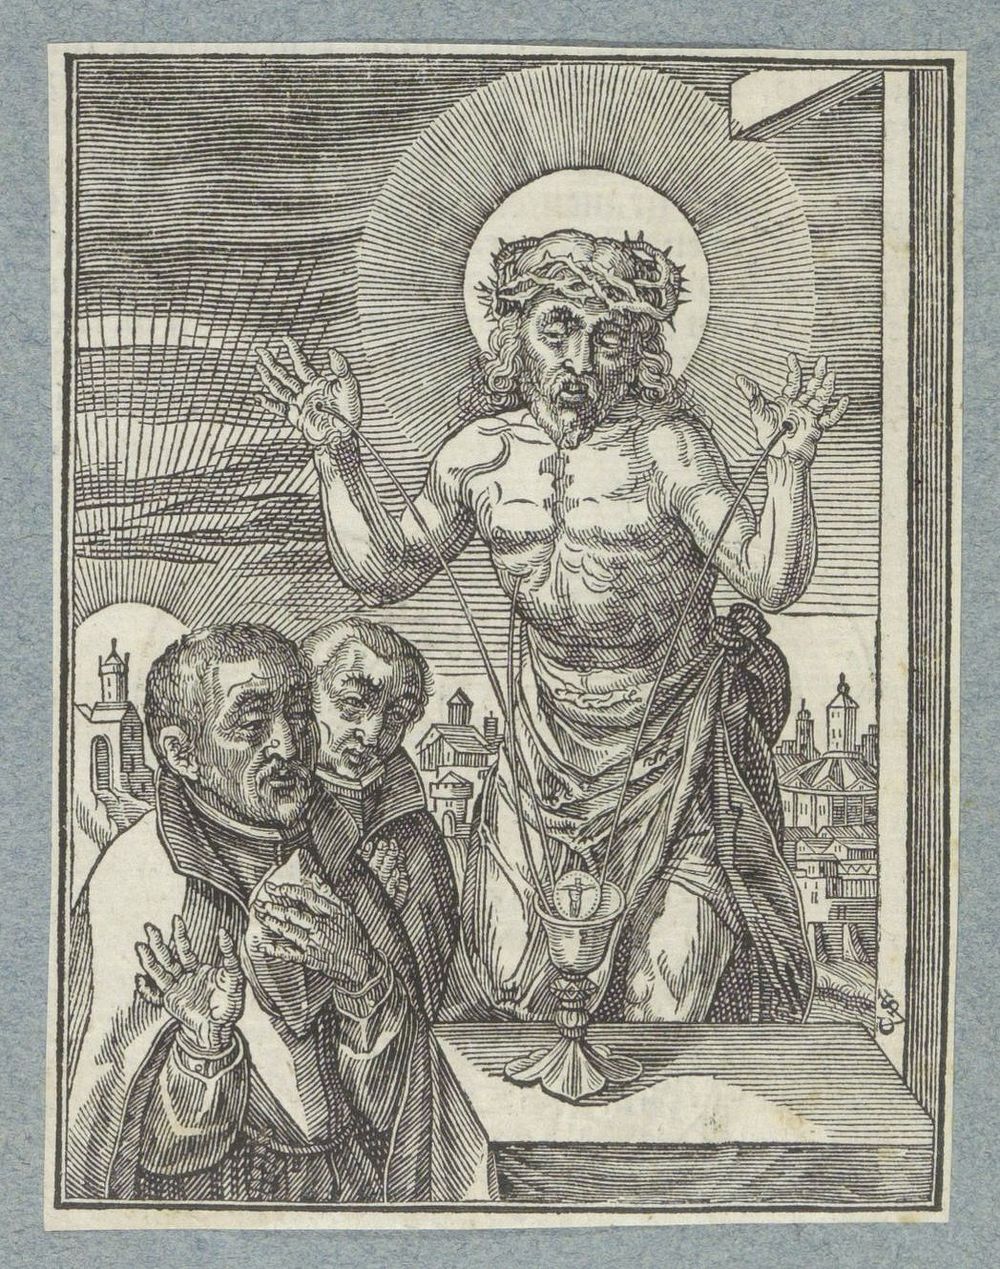 Bloed van Christus opgevangen in miskelk (1629) by Christoffel van Sichem II, Hieronymus Wierix and Pieter Jacobsz Paets